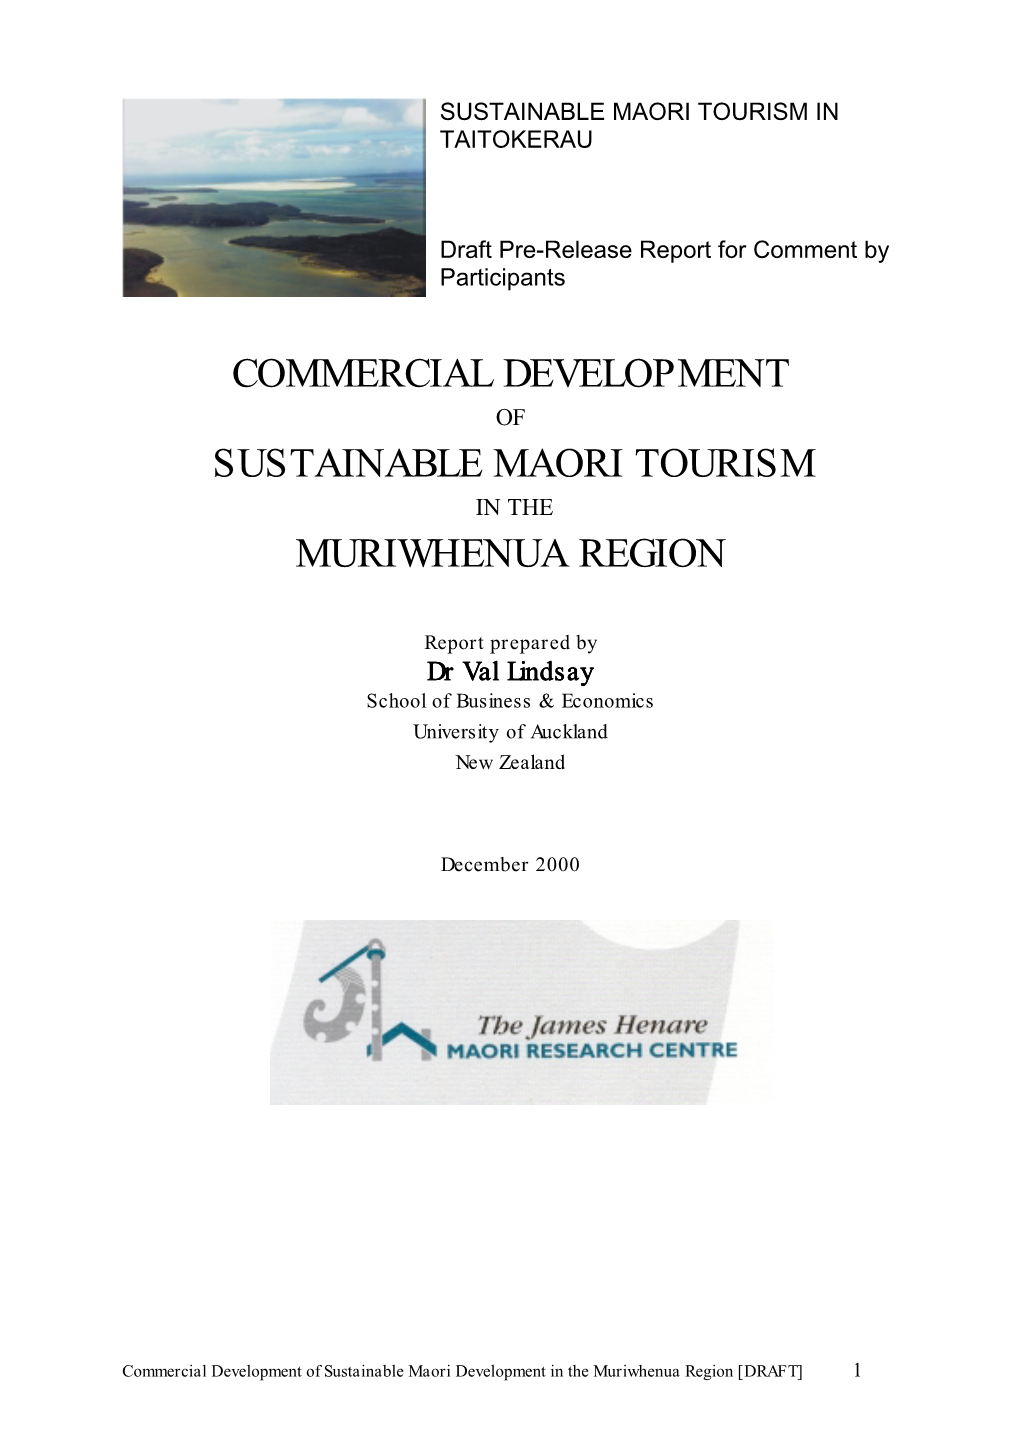 Commercial Development Sustainable Maori Tourism